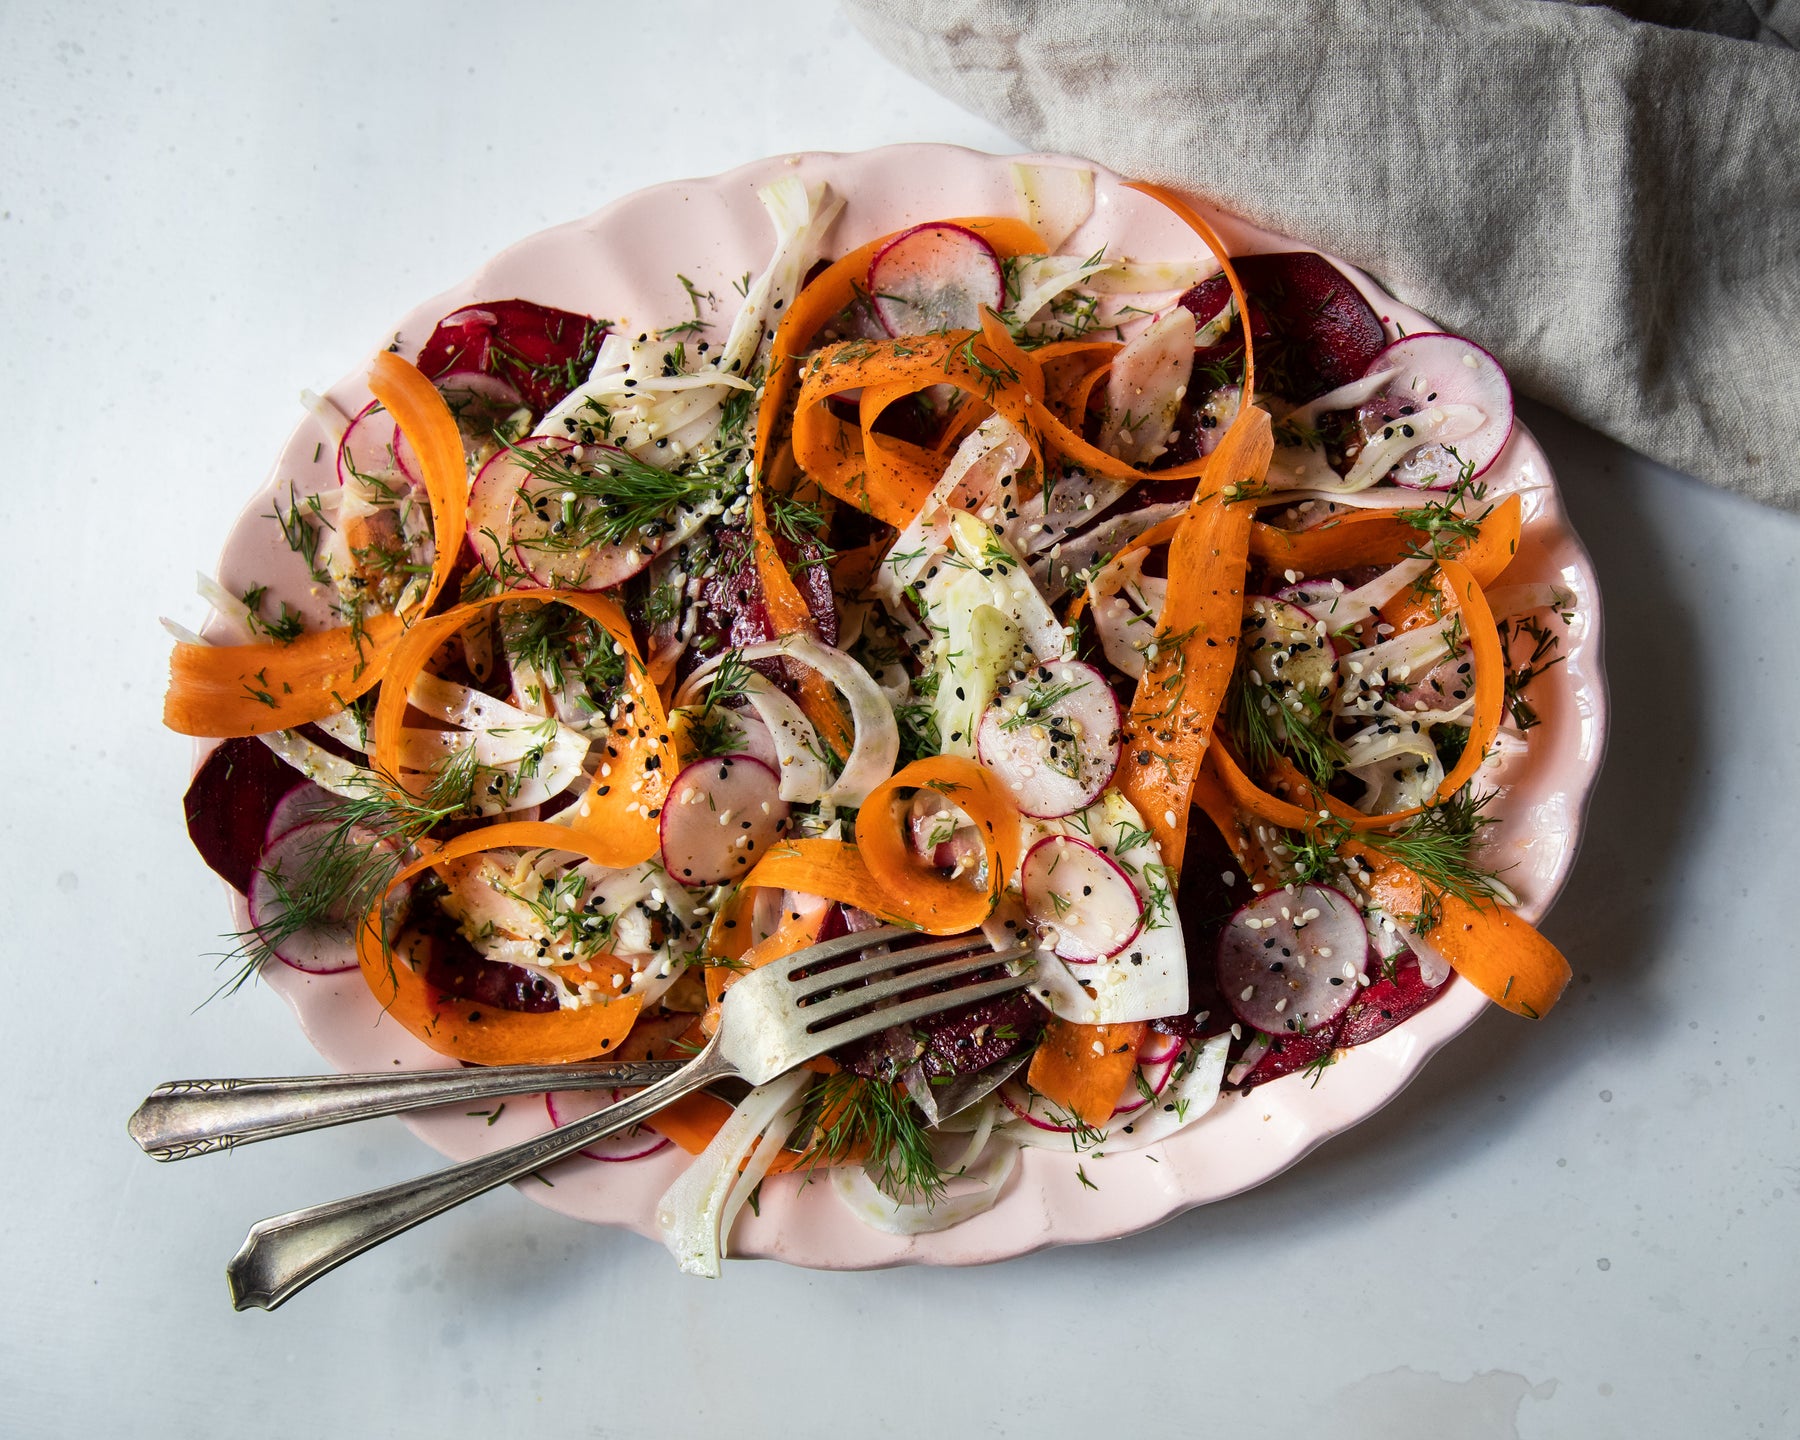 Fennel and root vegetable salad with Za’atar vinaigrette on a light pink serving platter